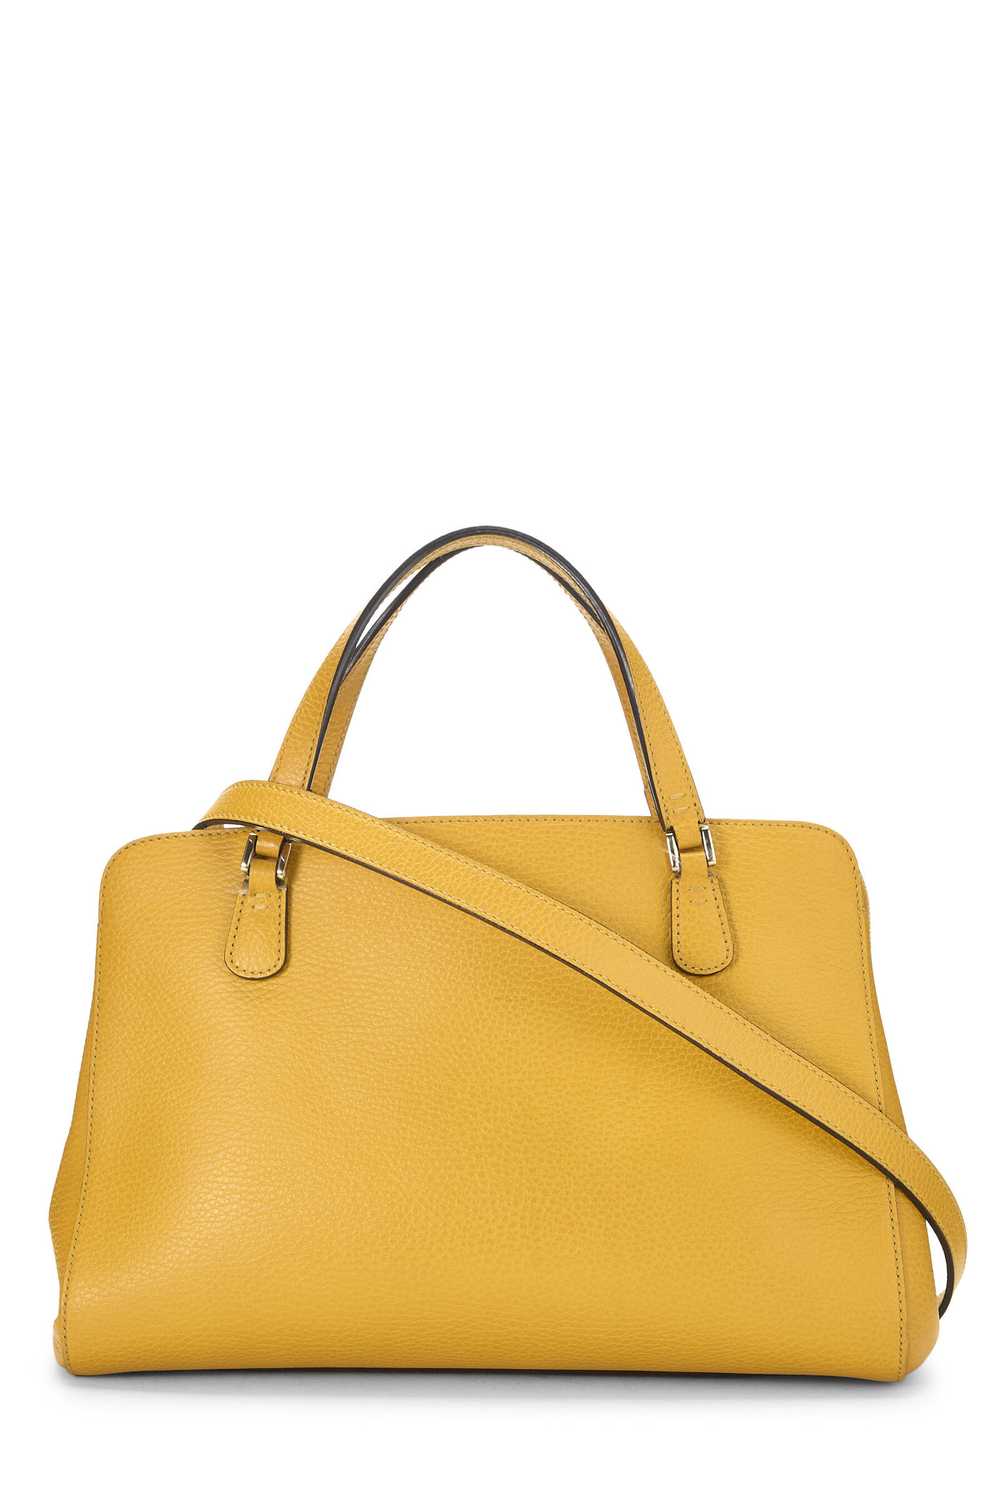 Yellow Leather Convertible Swing Top Handle Bag - image 4